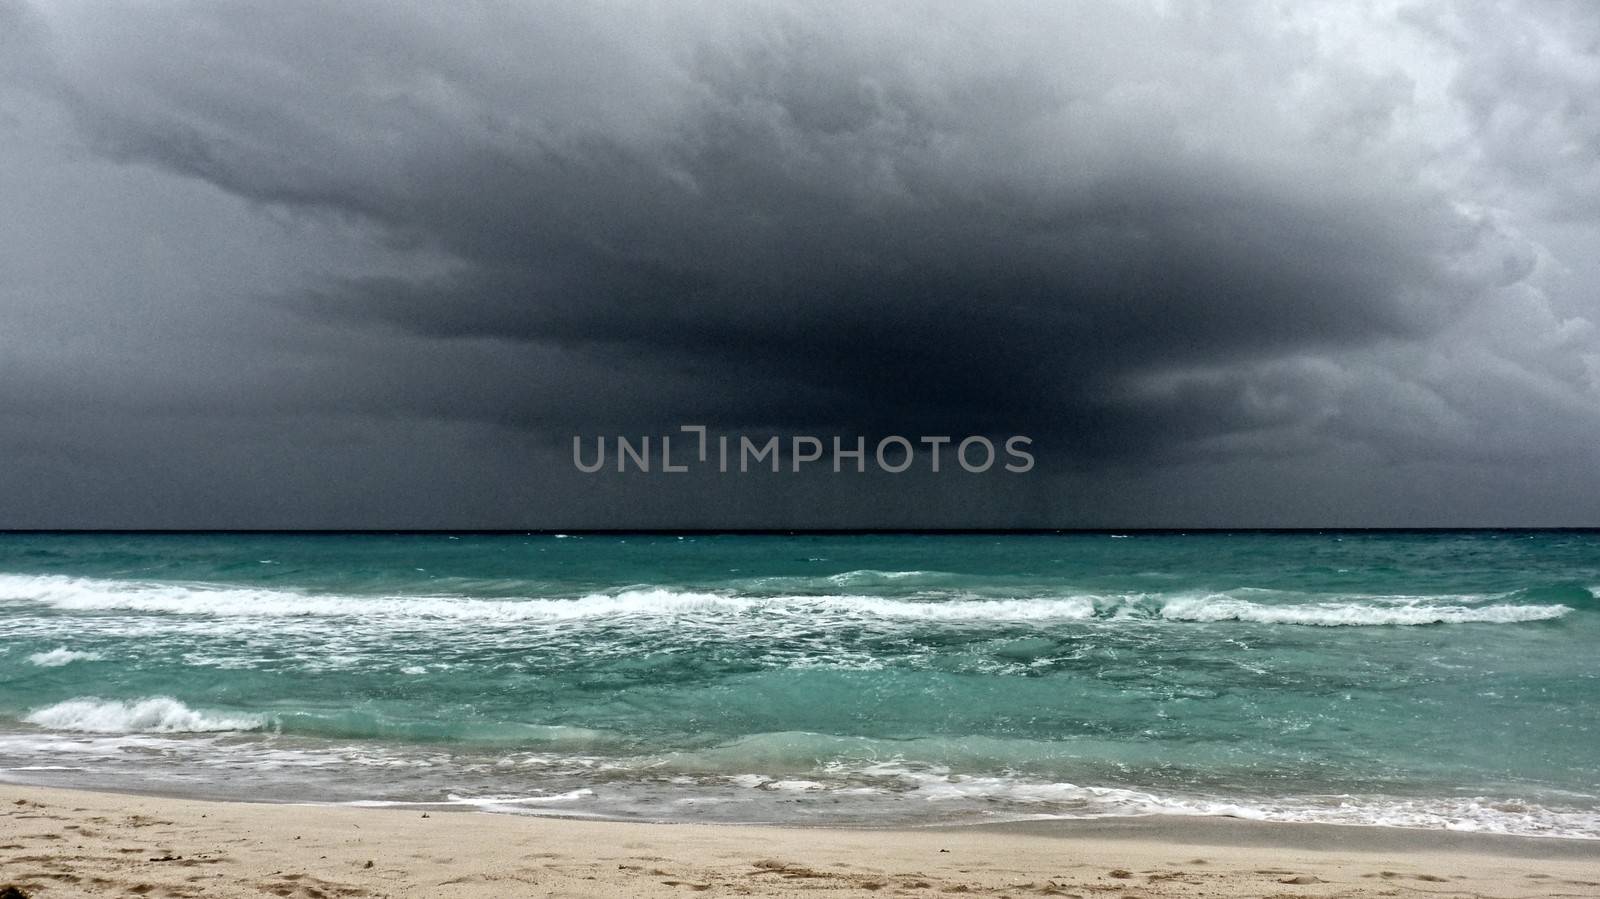 View of a storm on the ocean, Playa Del Carmen, Yucatan, Mexico